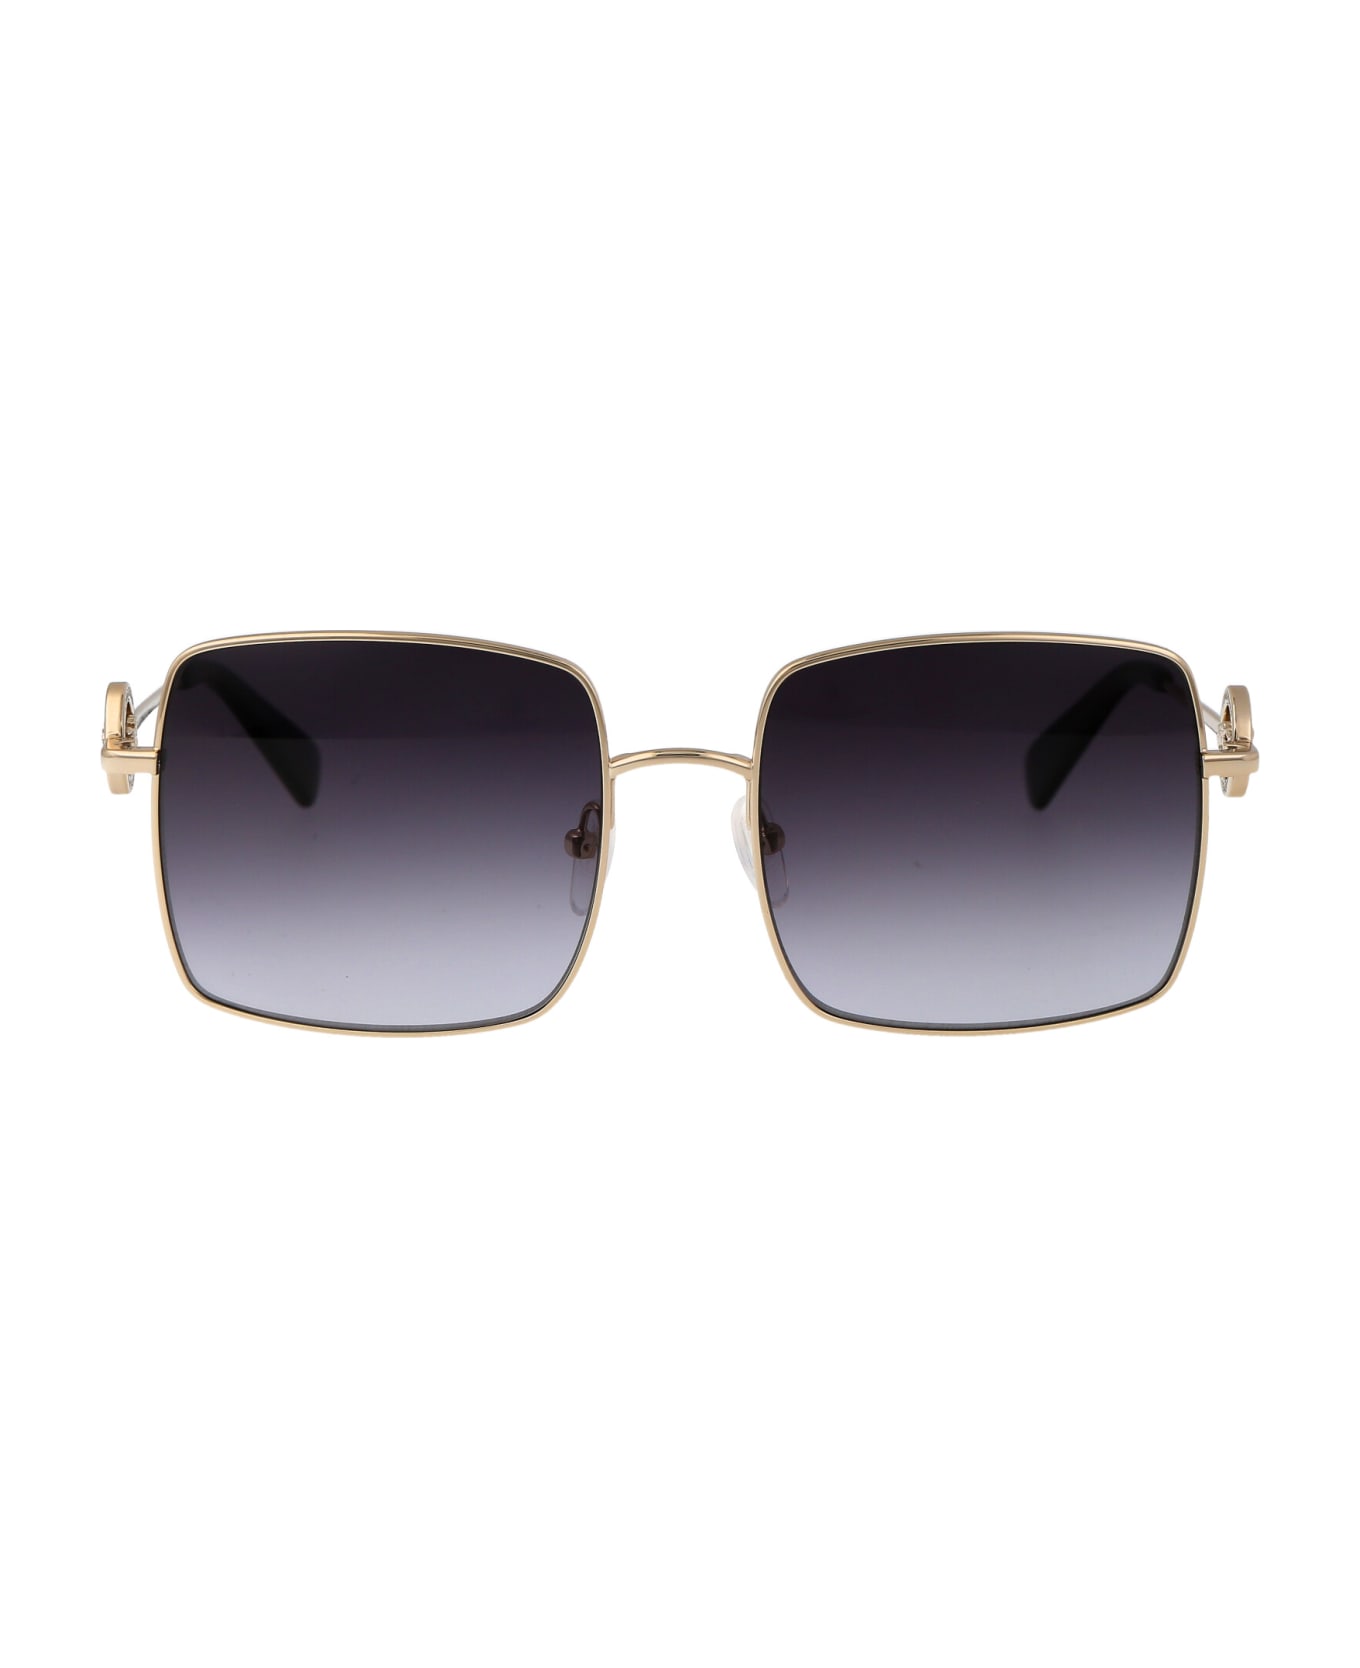 Longchamp Lo162s Sunglasses - 753 GOLD